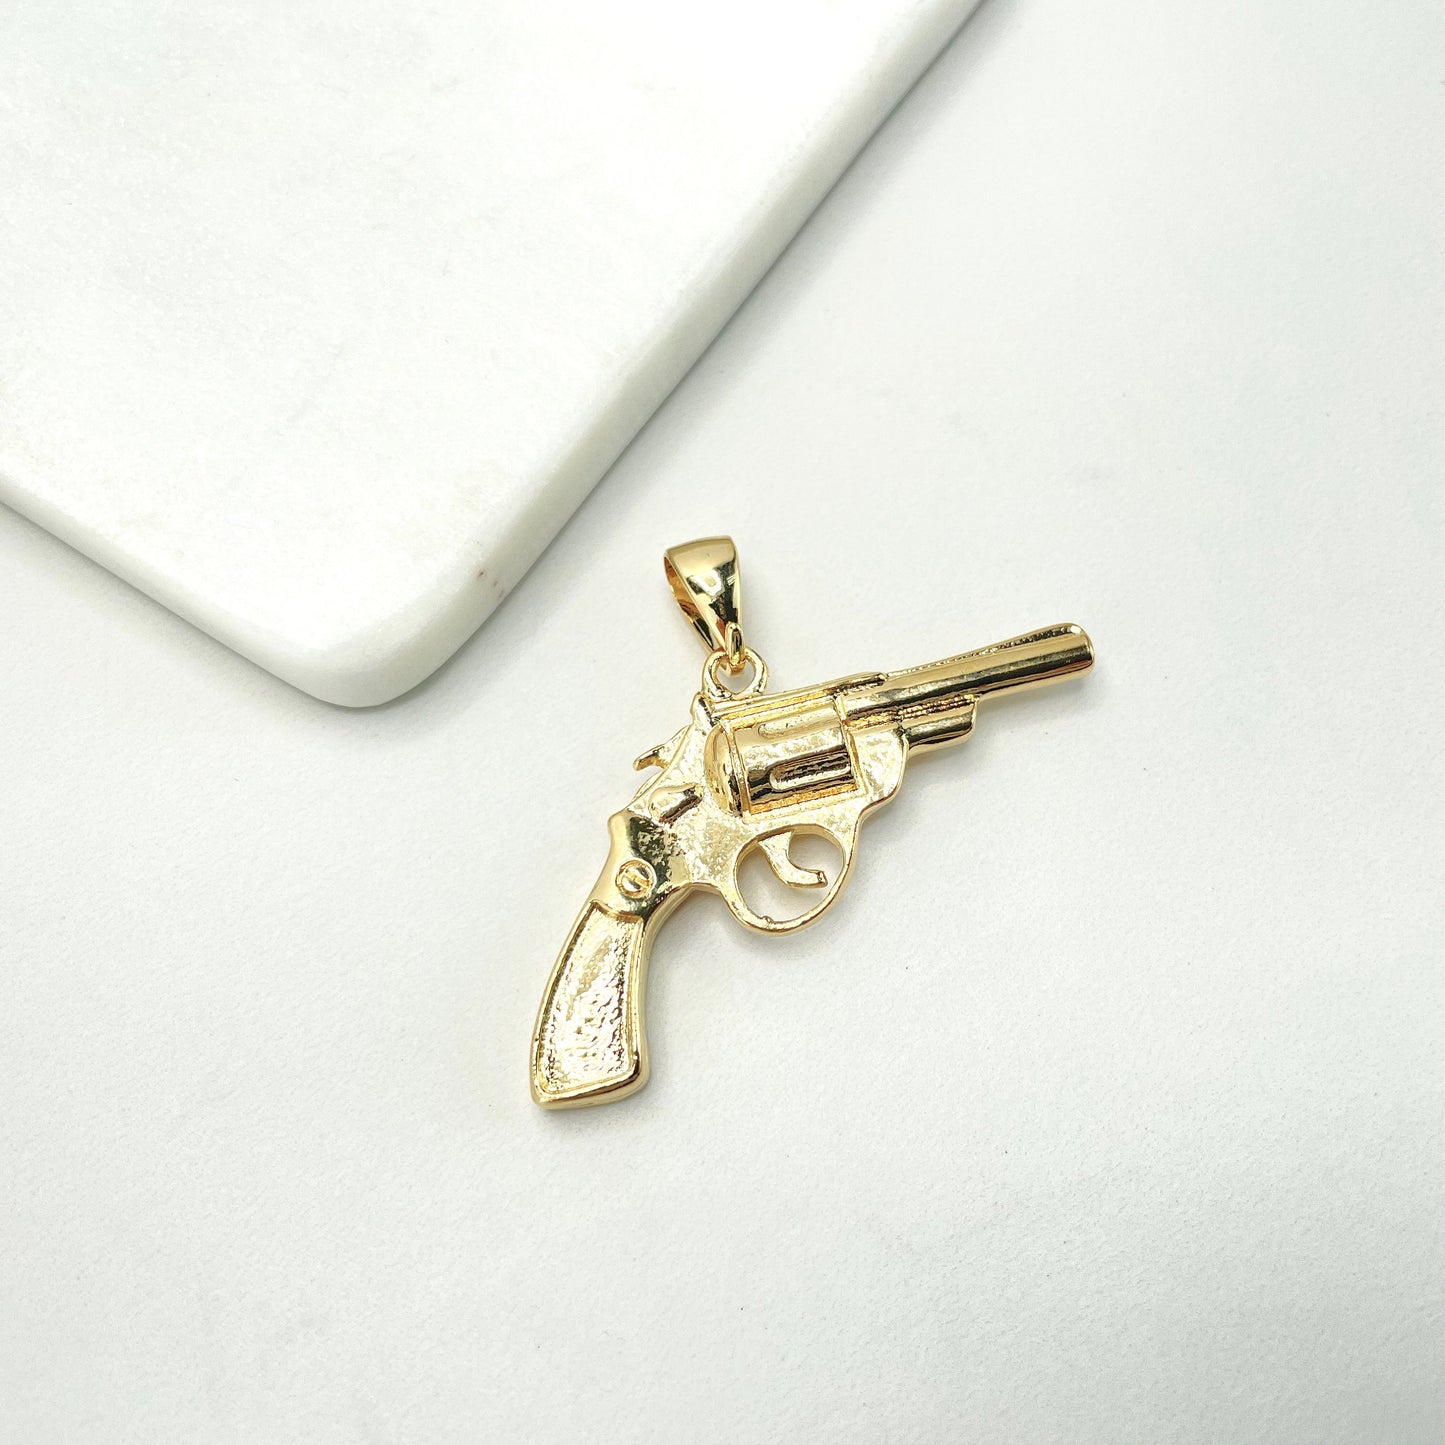 18k Gold Filled Revolver Pistol Gun 3D Pendant Charms, Fire Gun Shape, Men's Jewelry, Wholesale Jewelry Making Supplies